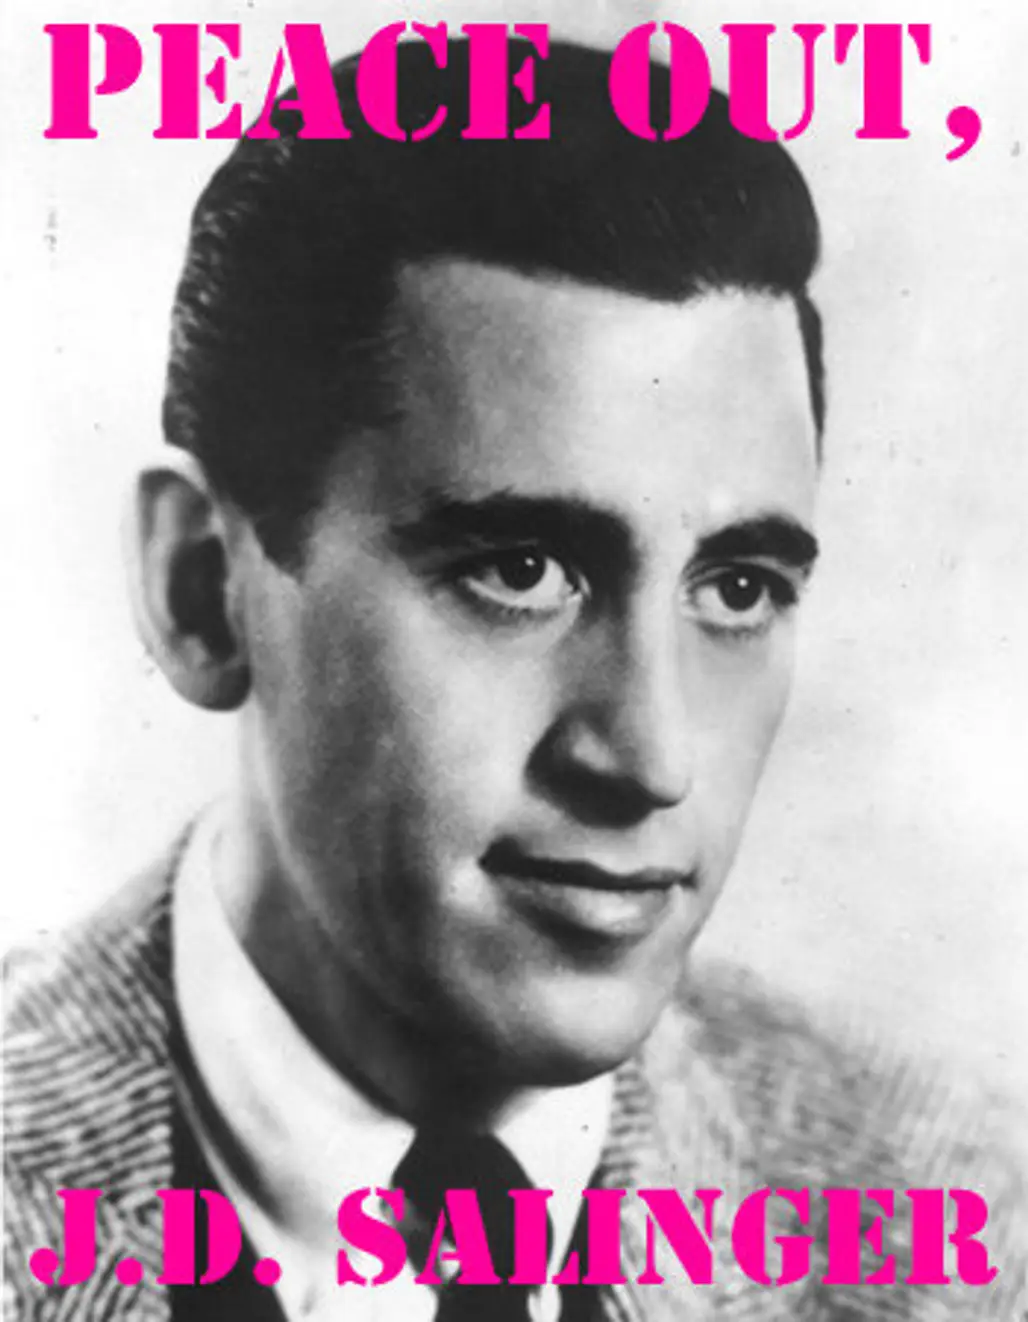 J.D. Salinger Passes at Age 91